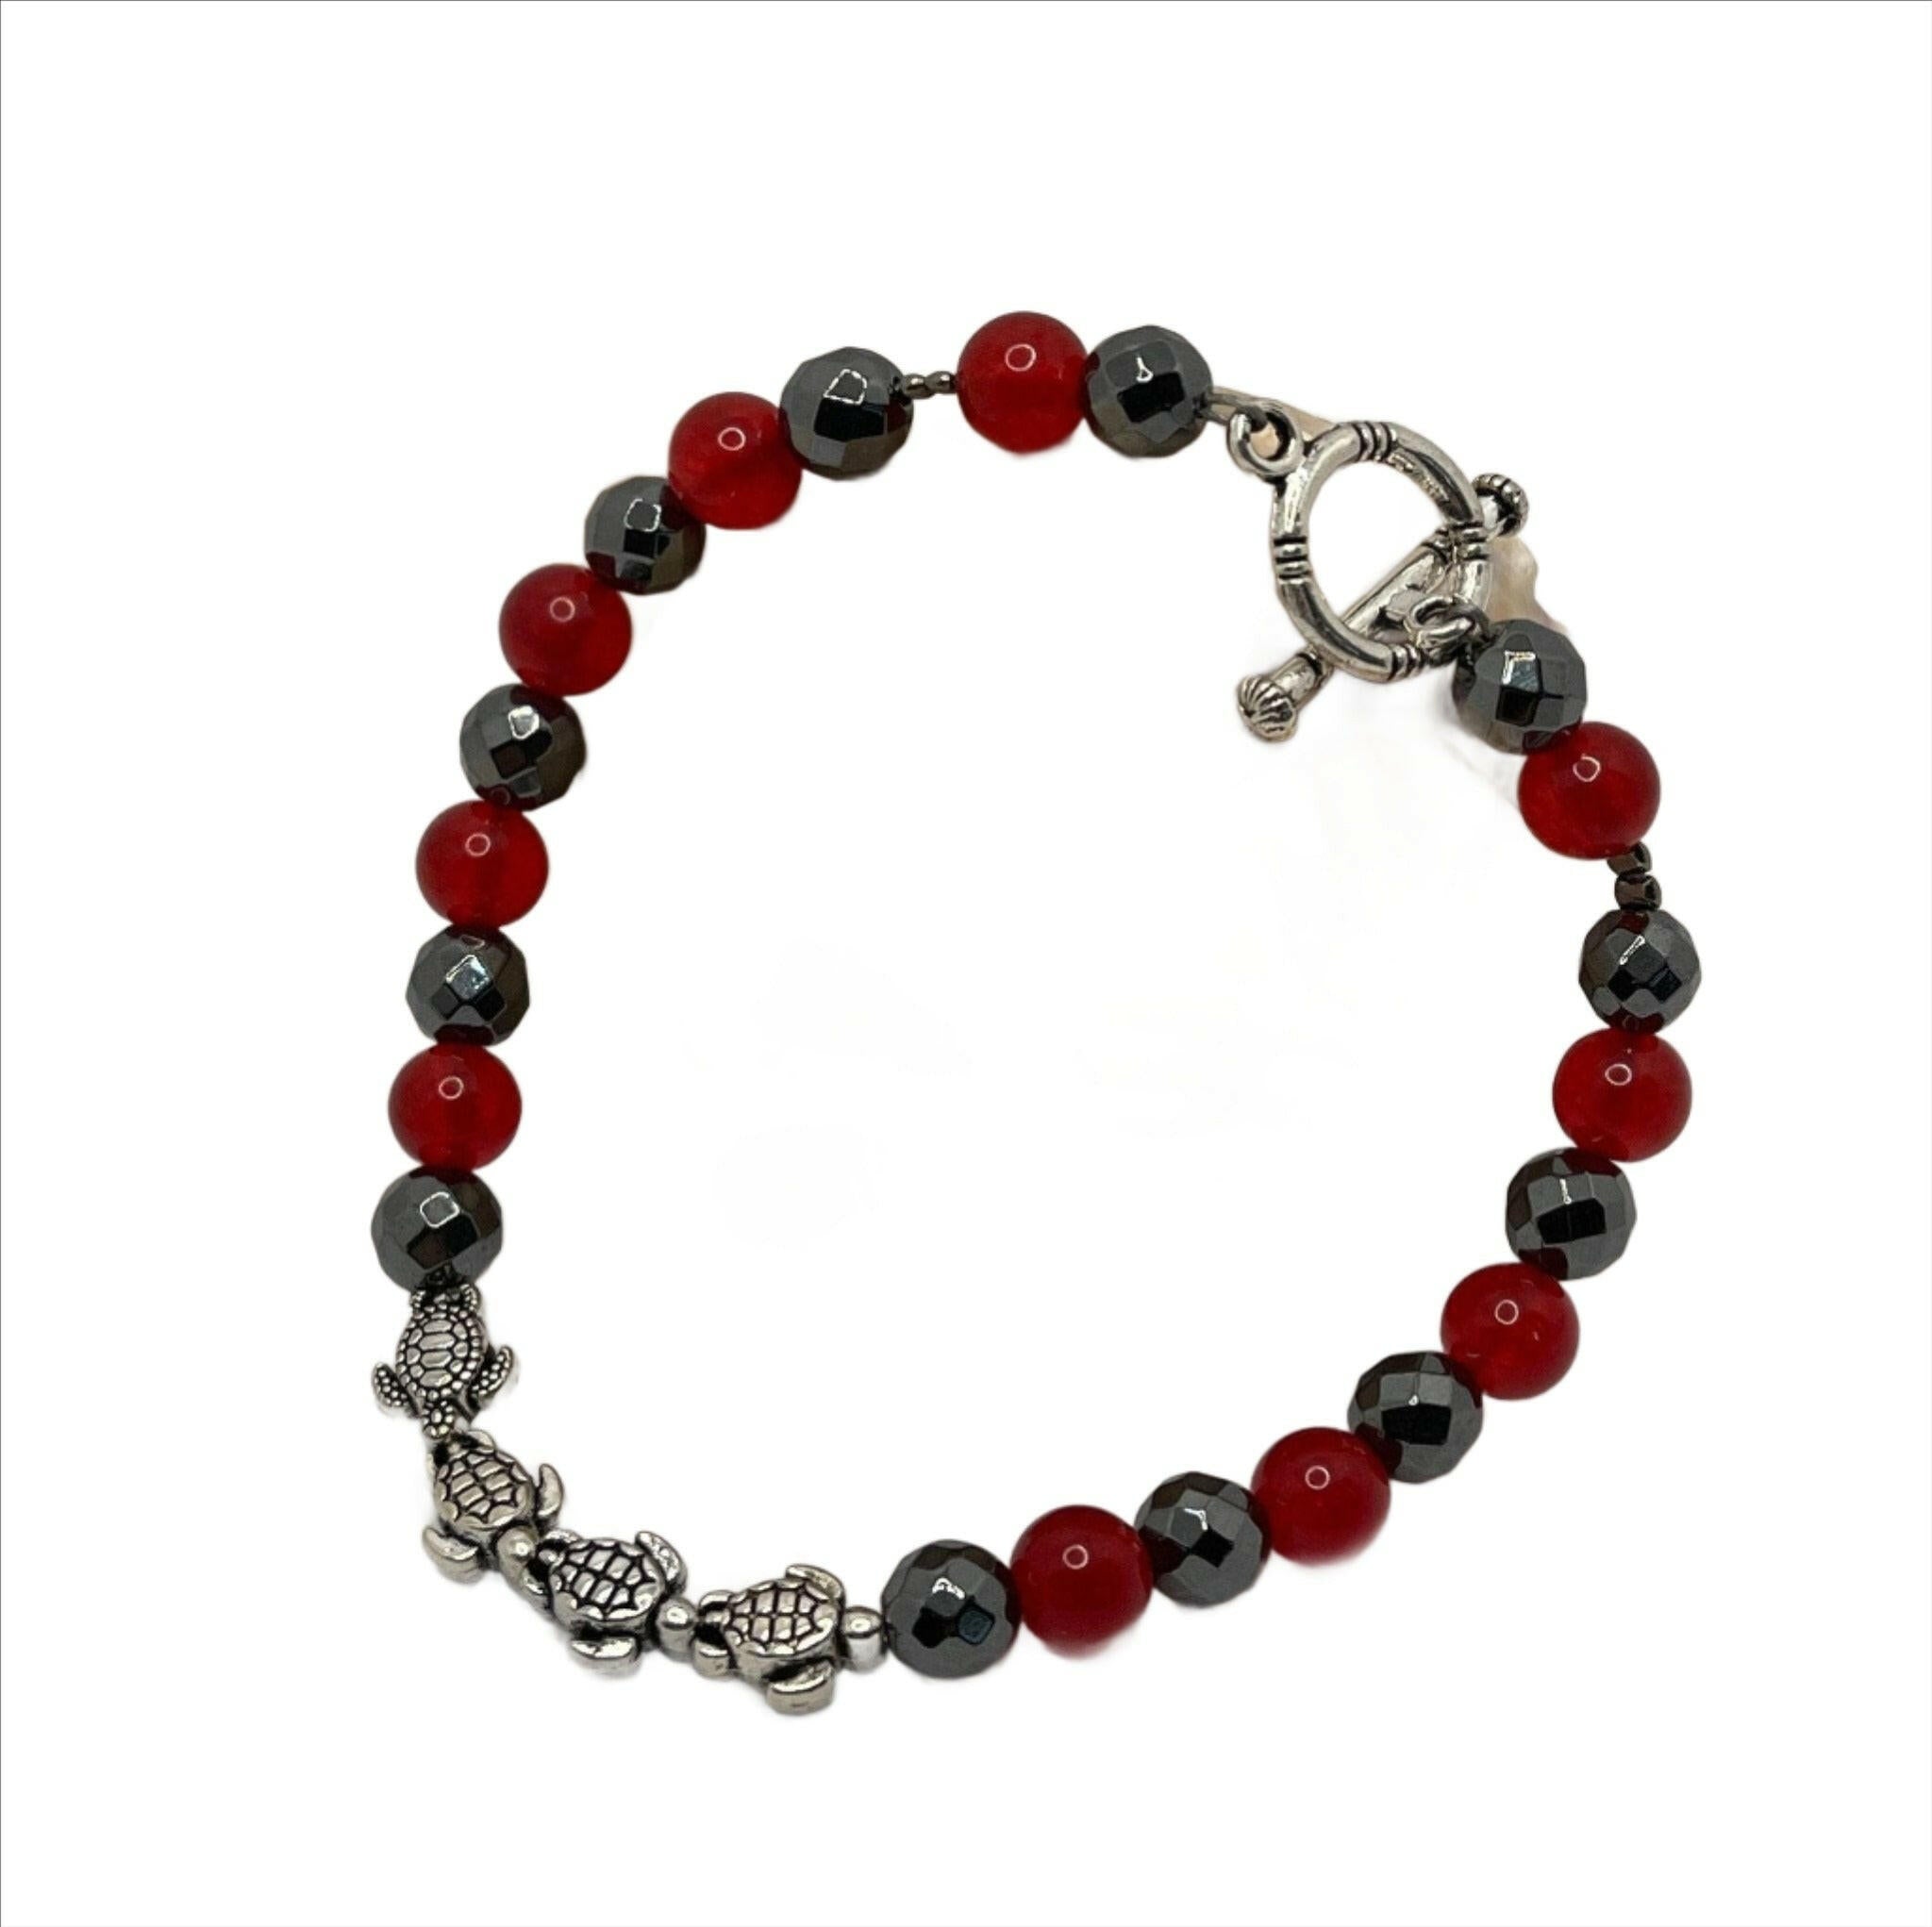 Bec Sue Jewelry Shop turtle bracelet 6.5 / red / silver turtle/hematite/red coral beads Turtle Bracelet, Red coral bamboo Bracelet Tags 178